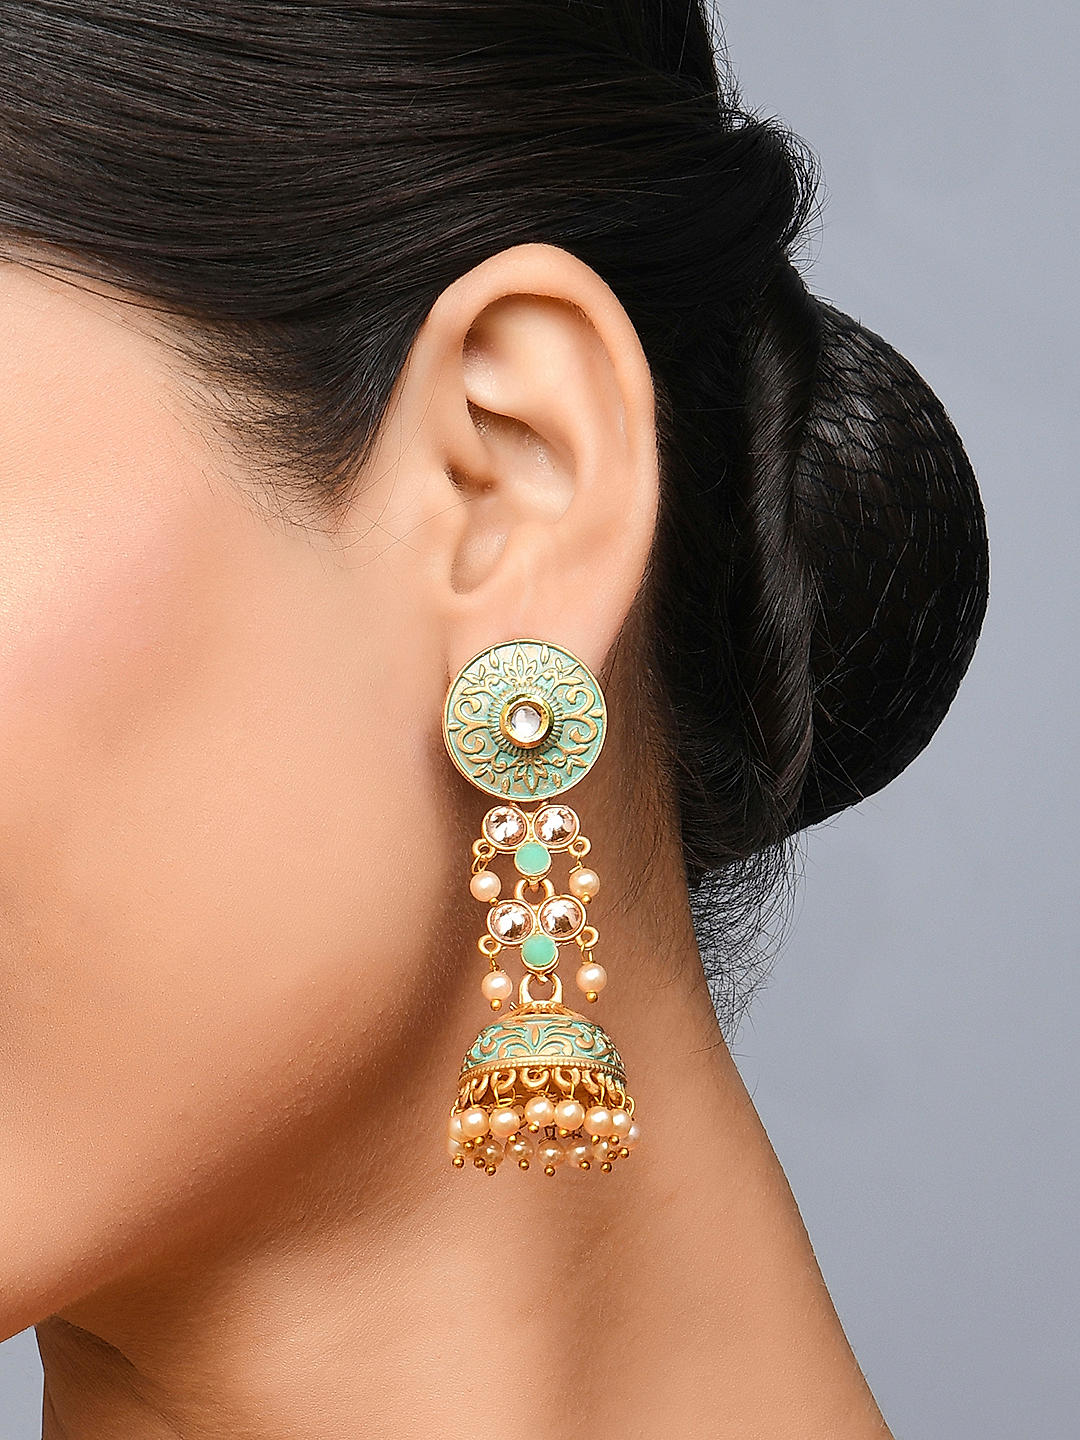 Heavenly Ethnic Antique Gold Chandbali Earrings